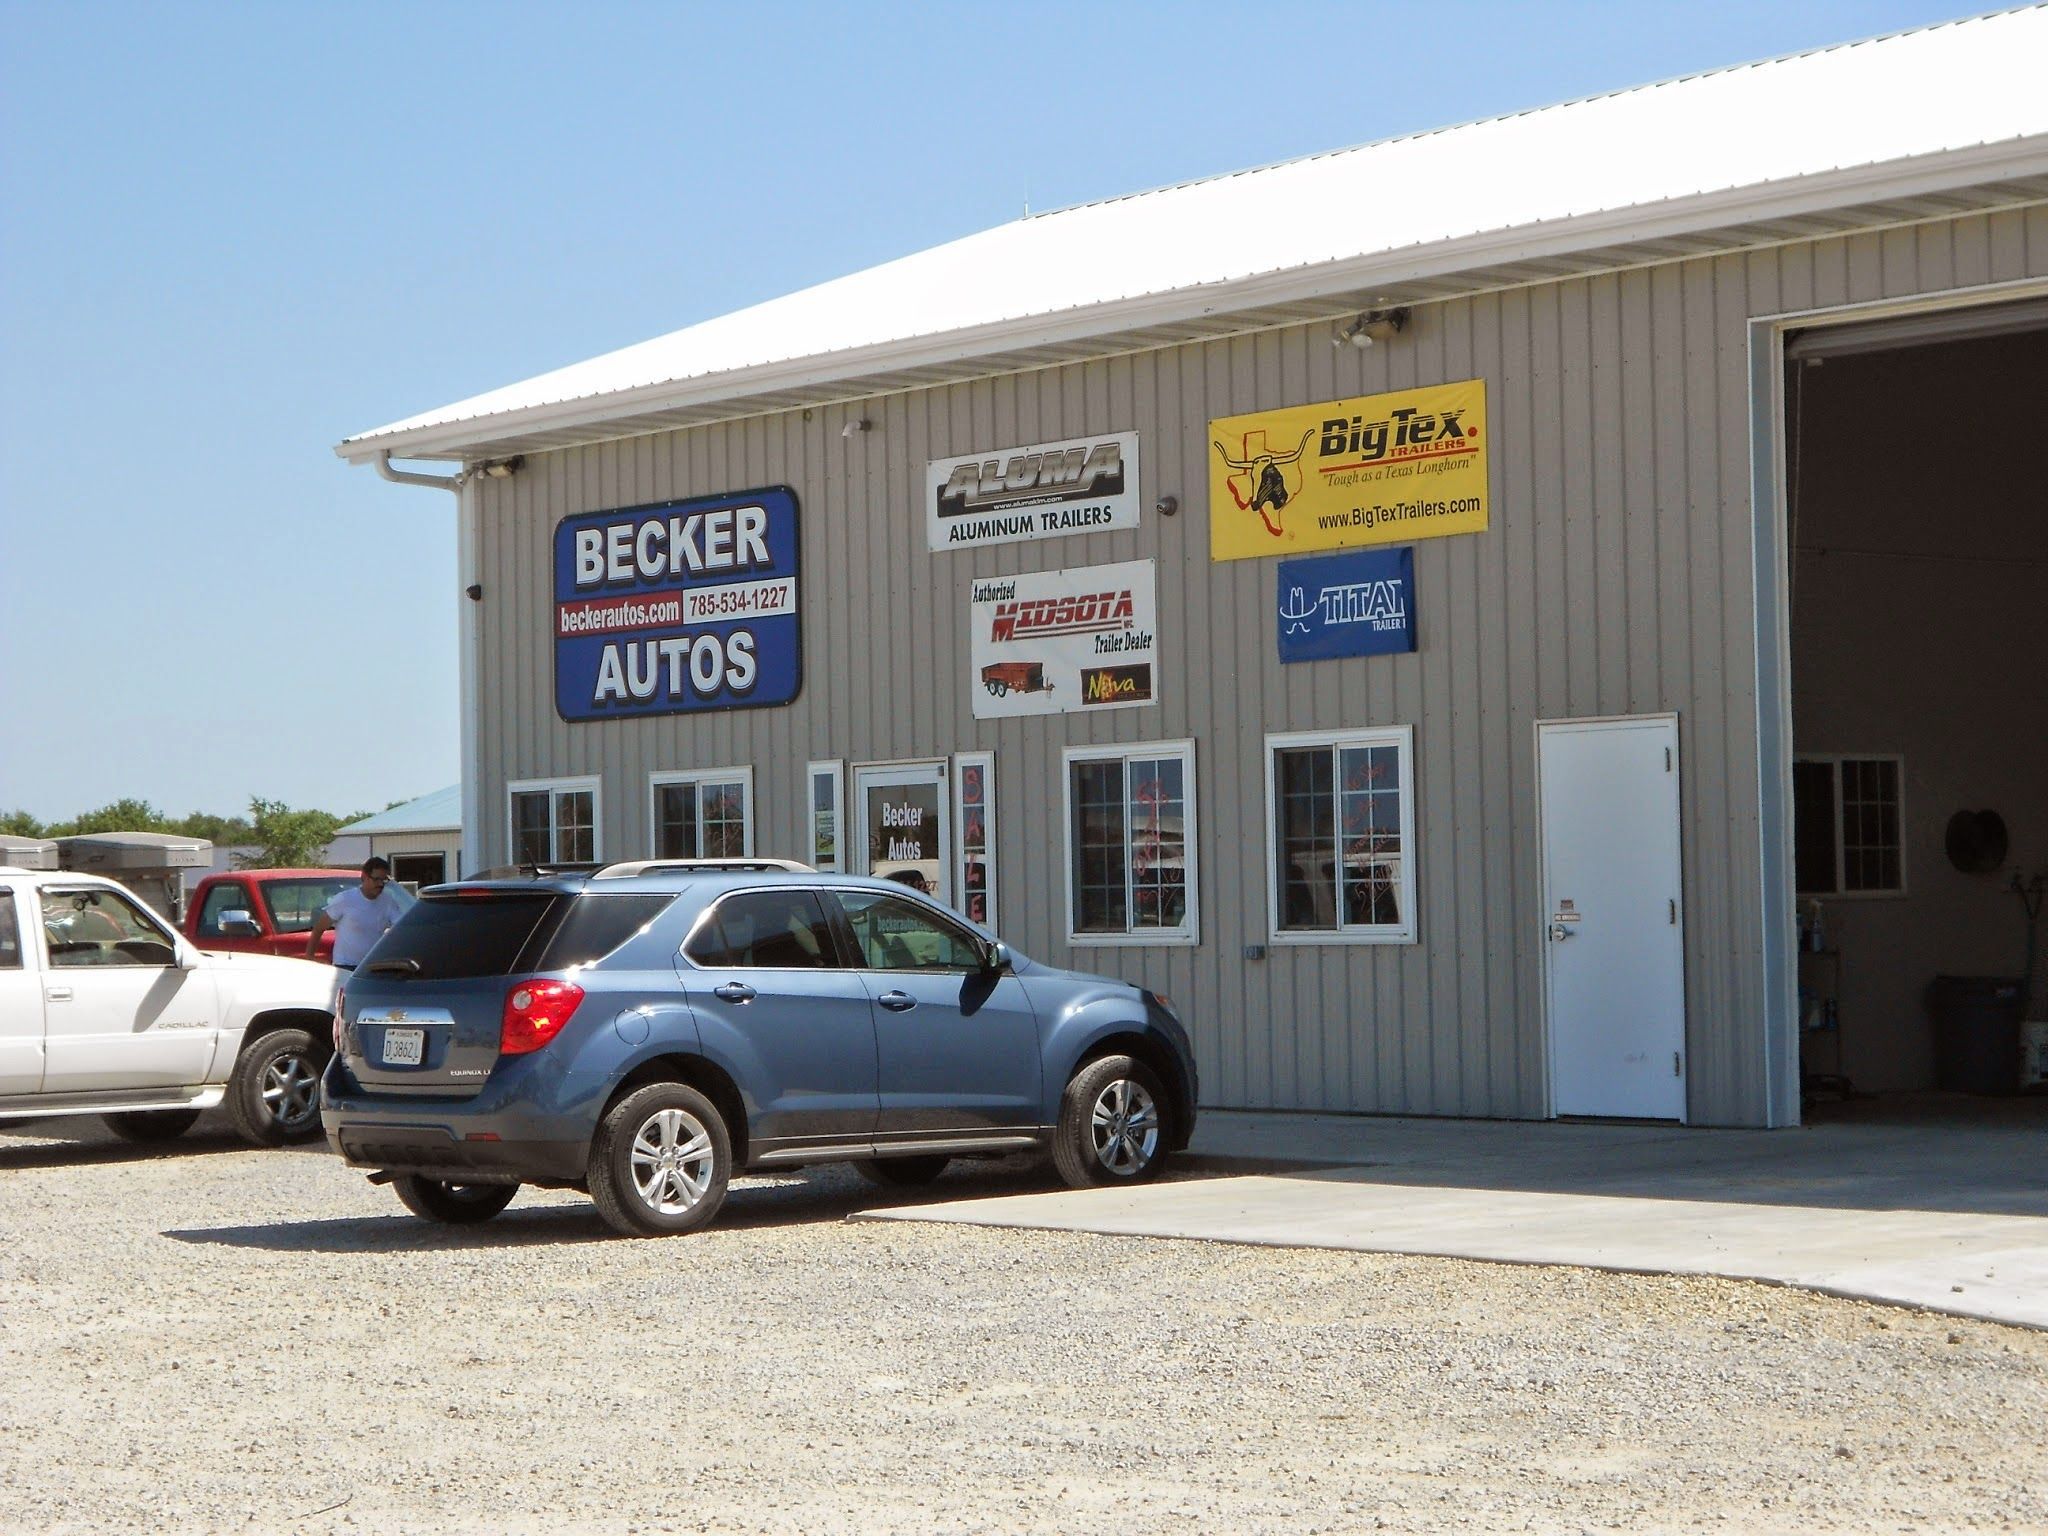 Becker Autos Trailers & Camper Supercenter